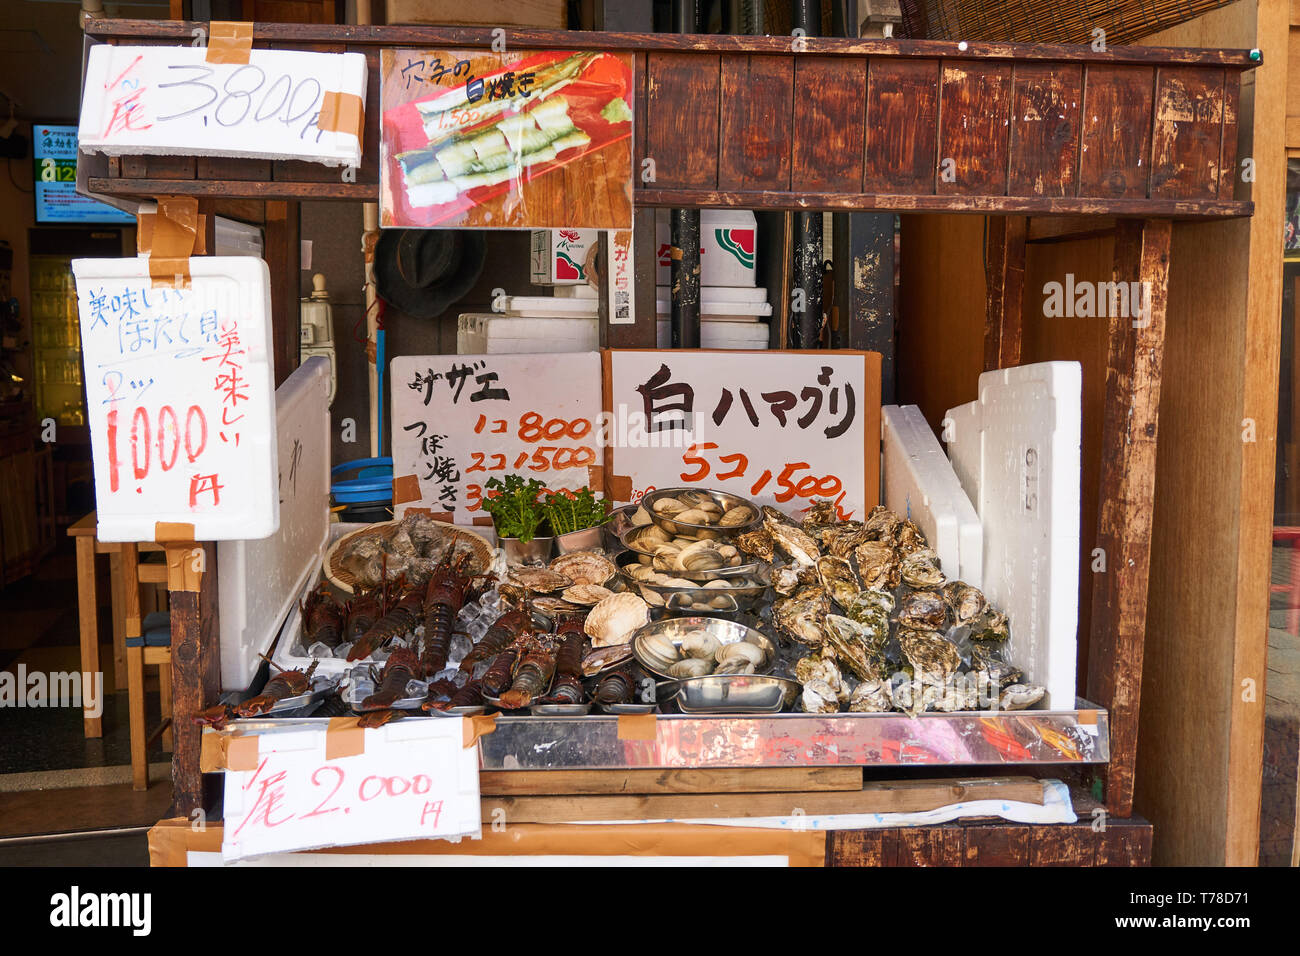 A seafood stand in Asakusa, Tokyo, Japan, selling clams (shiro hamaguri), sea snails (sazae), jumbo shrimp, eels (anago) and scallops (hotate). Stock Photo